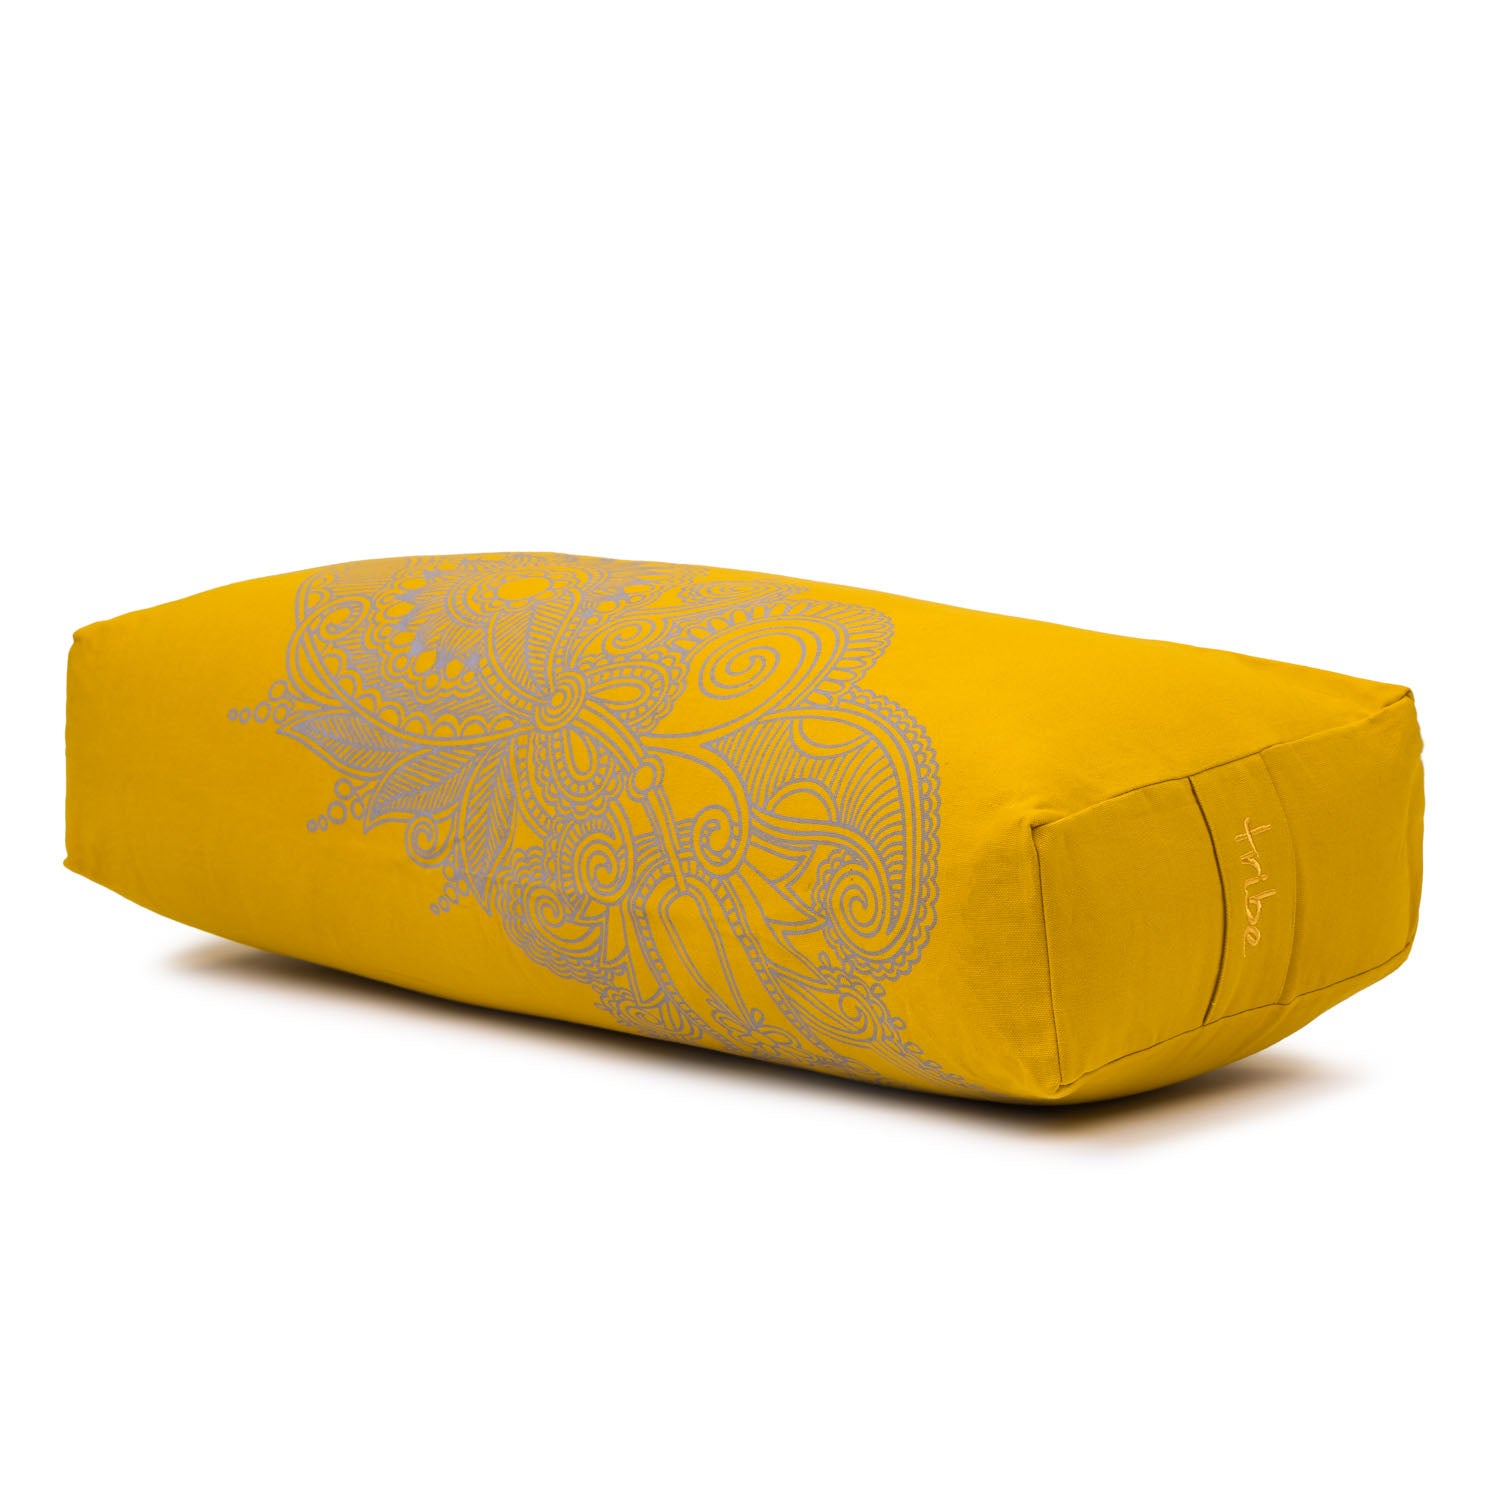 Rectangular Bolster - Organic Cotton Cover Henna Print Design - Gold - 45 degrees angle | TRIBE Yoga